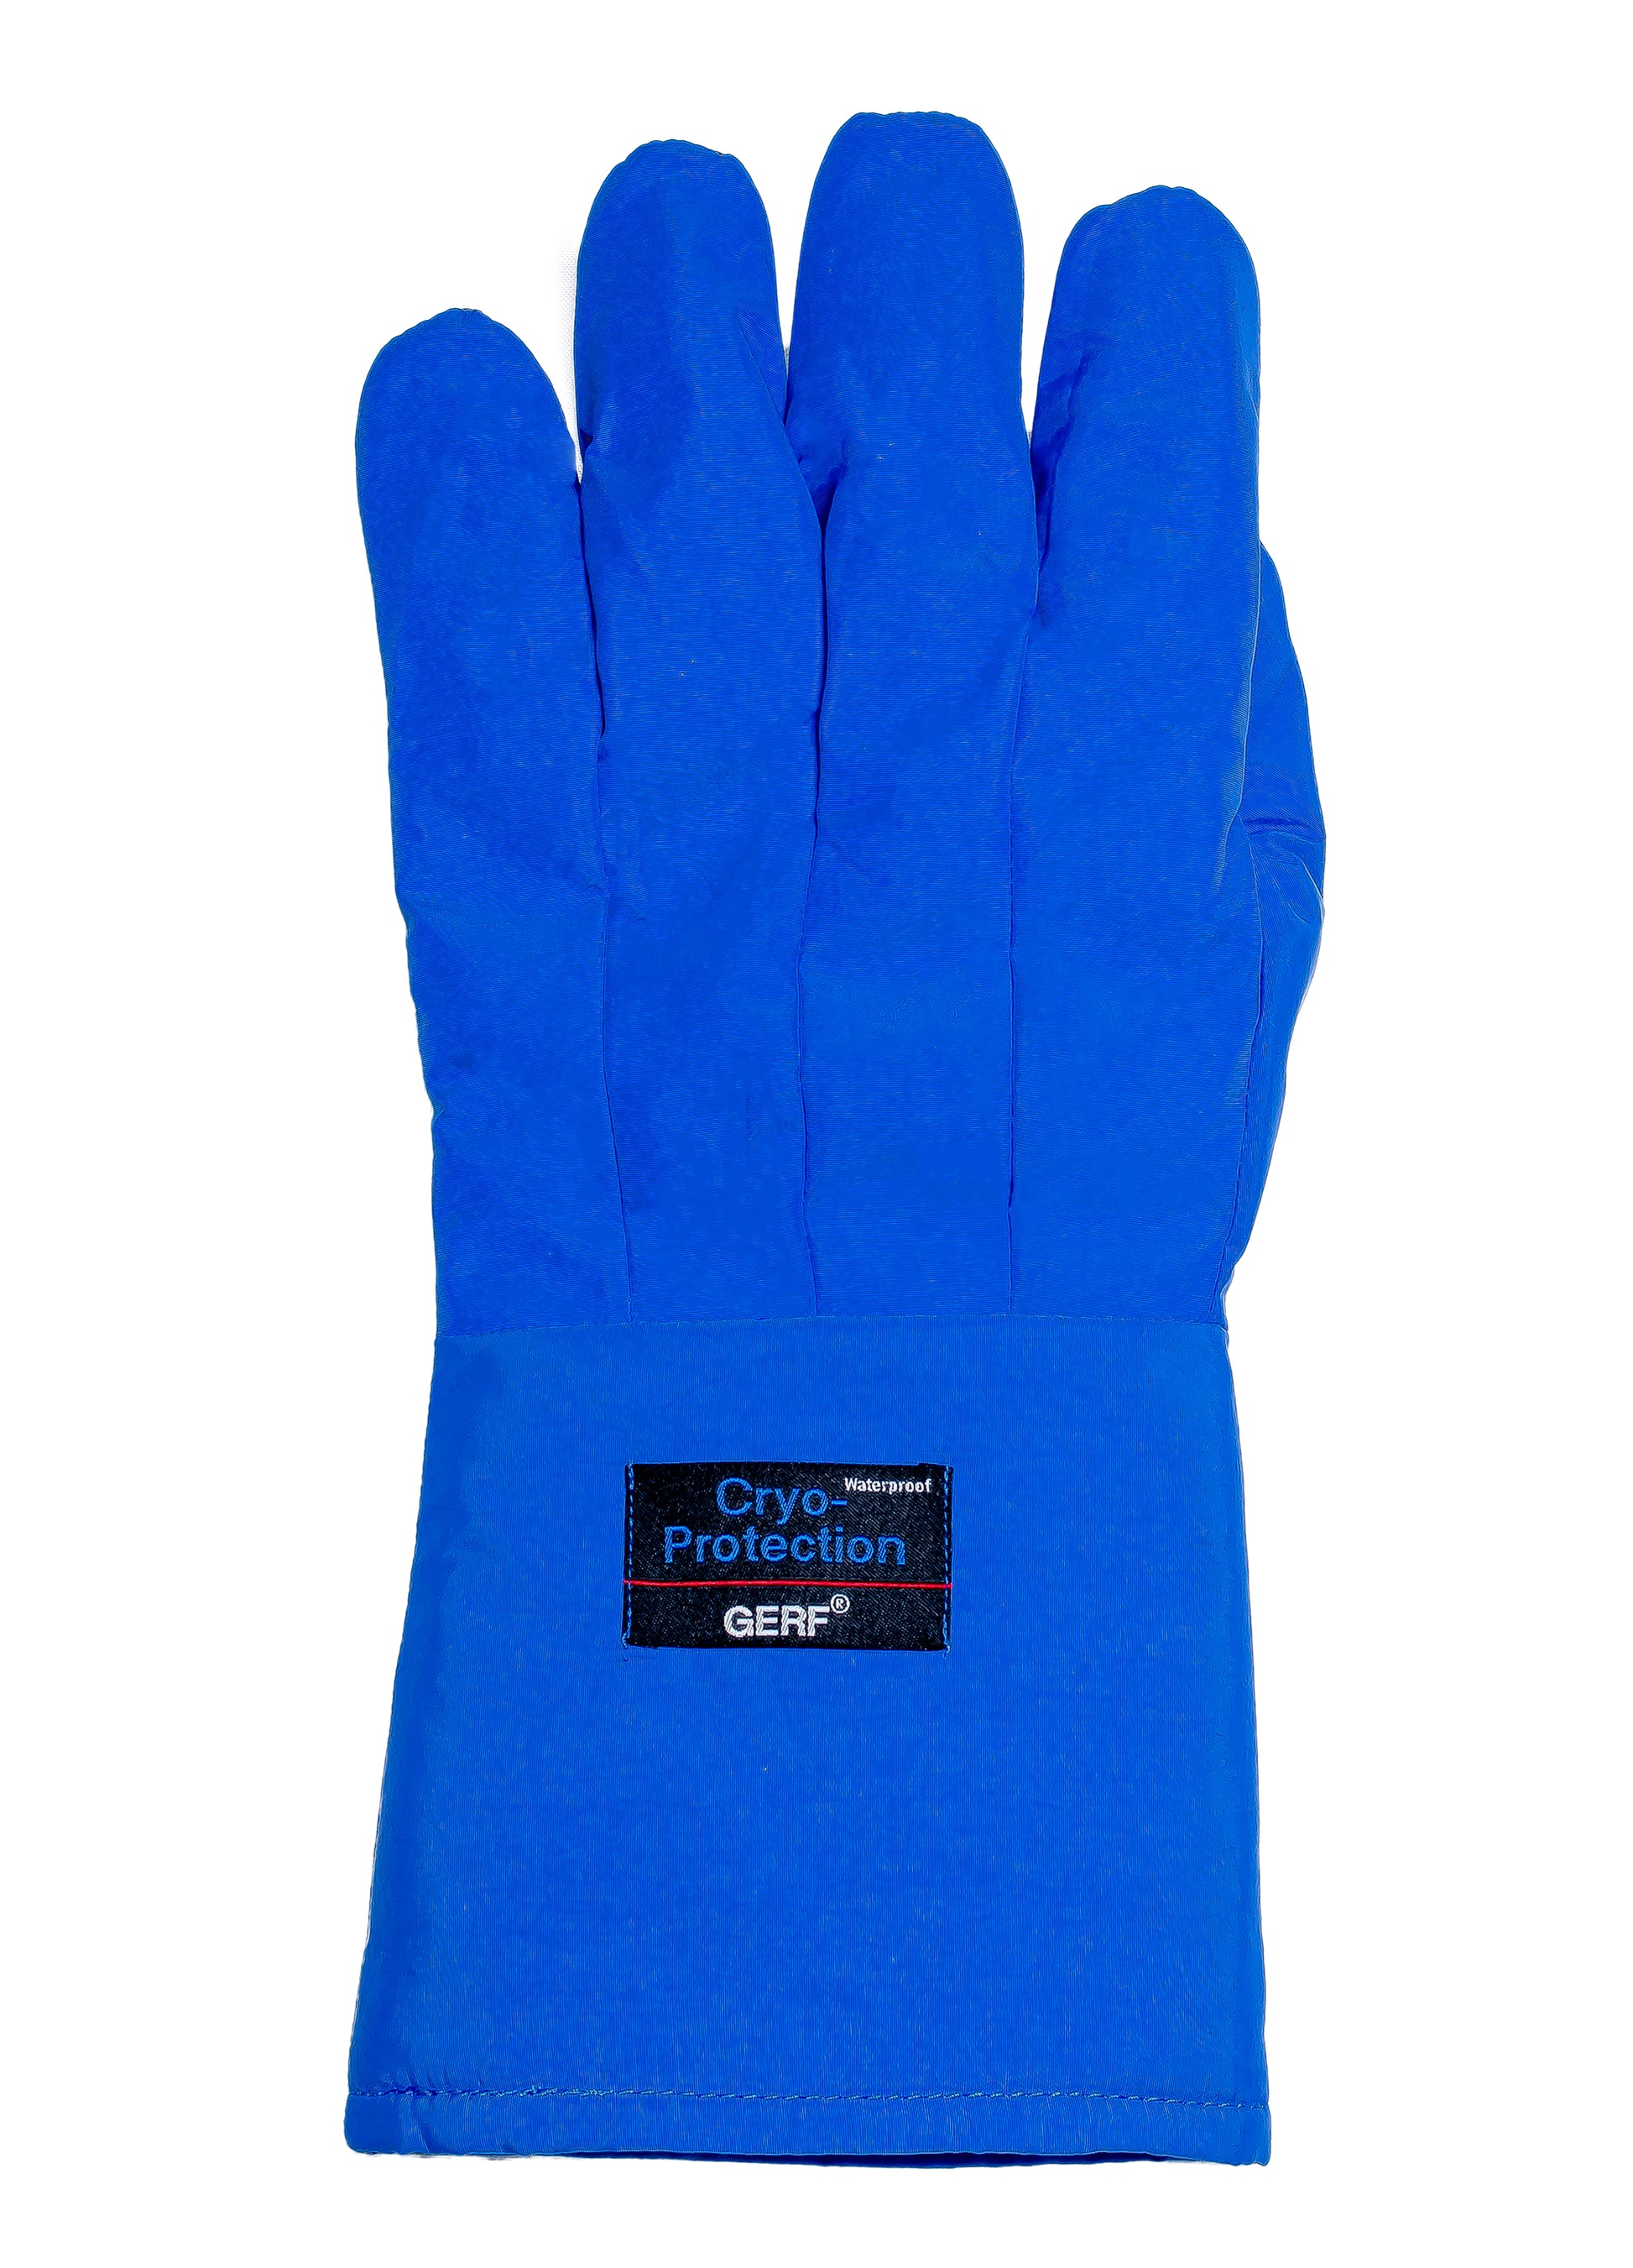 cryo gloves grip mid arm, guantes criogenicos reforzados, guantes criogenicos grip, guantes criogenicos cryo protection, guantes para nitrogeno liquido, guantes para oxigeno liquido, guantes para hielo seco, guantes para helio